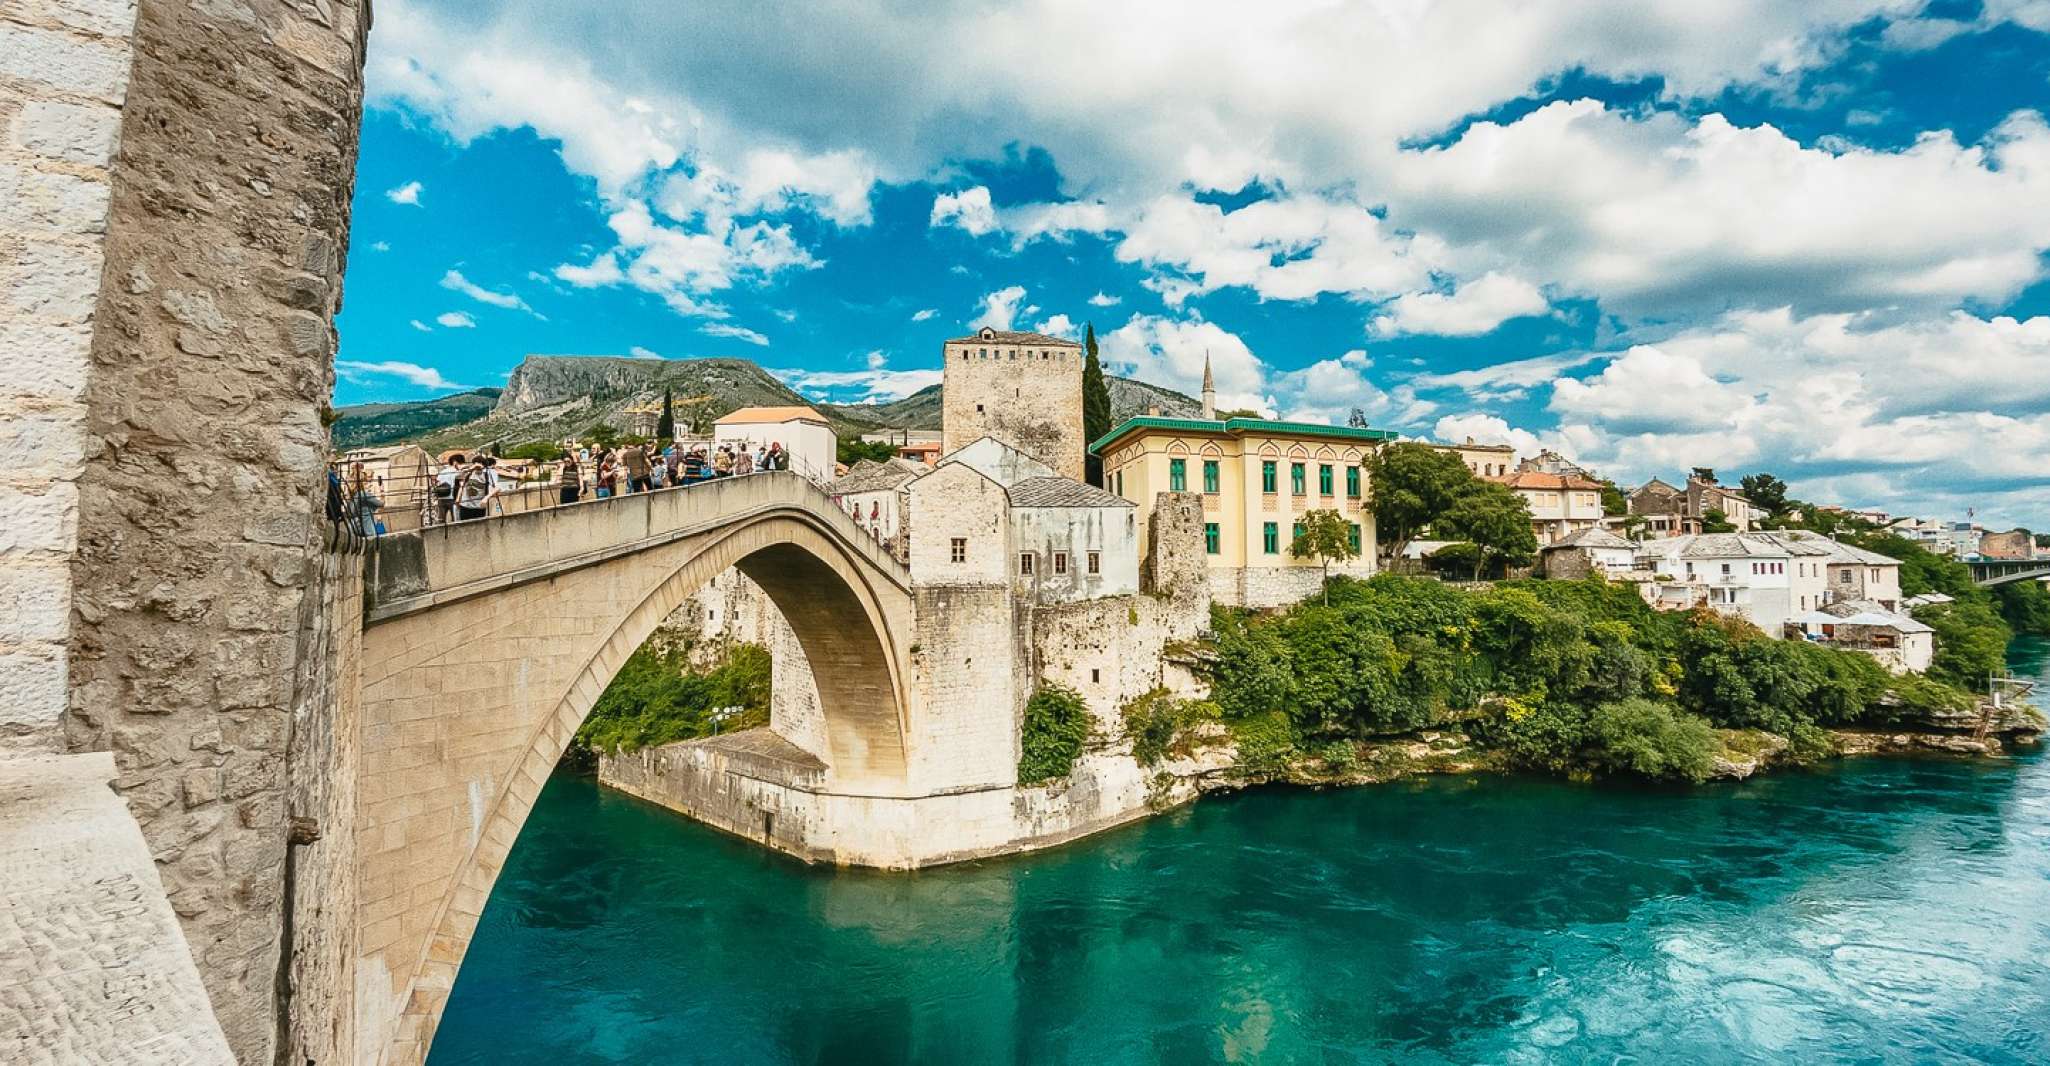 From Cavtat, Bosnia, Herzegovina and the Old Bridge Tour - Housity